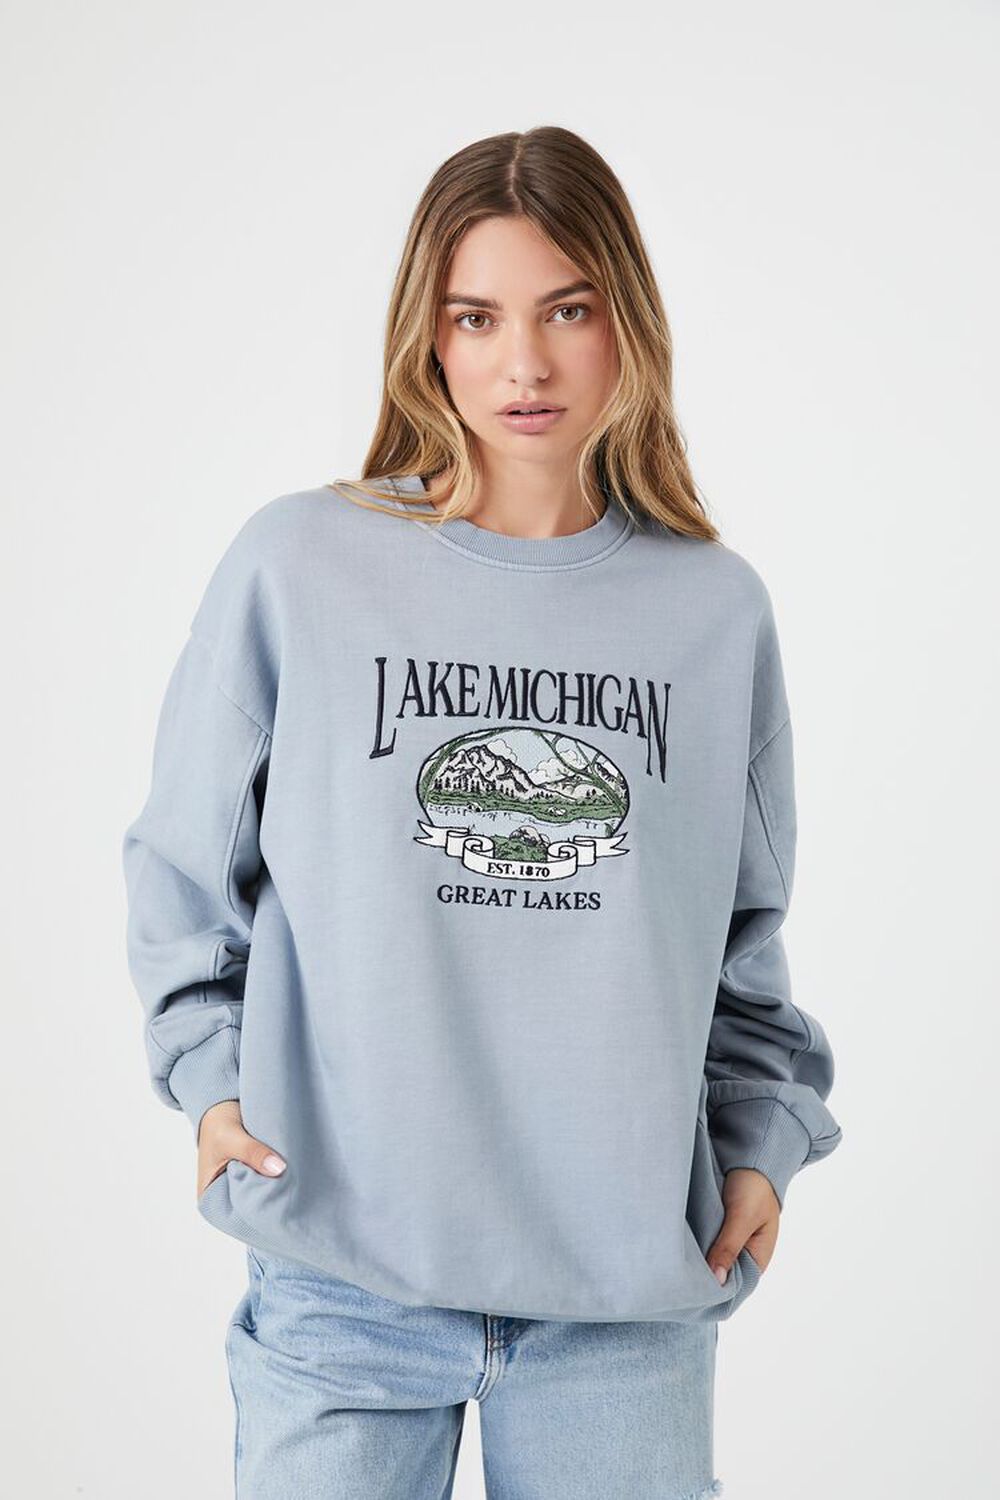 Fall Leaf Embroidered Crewneck Sweatshirt (CLOSEOUT) – Michigan